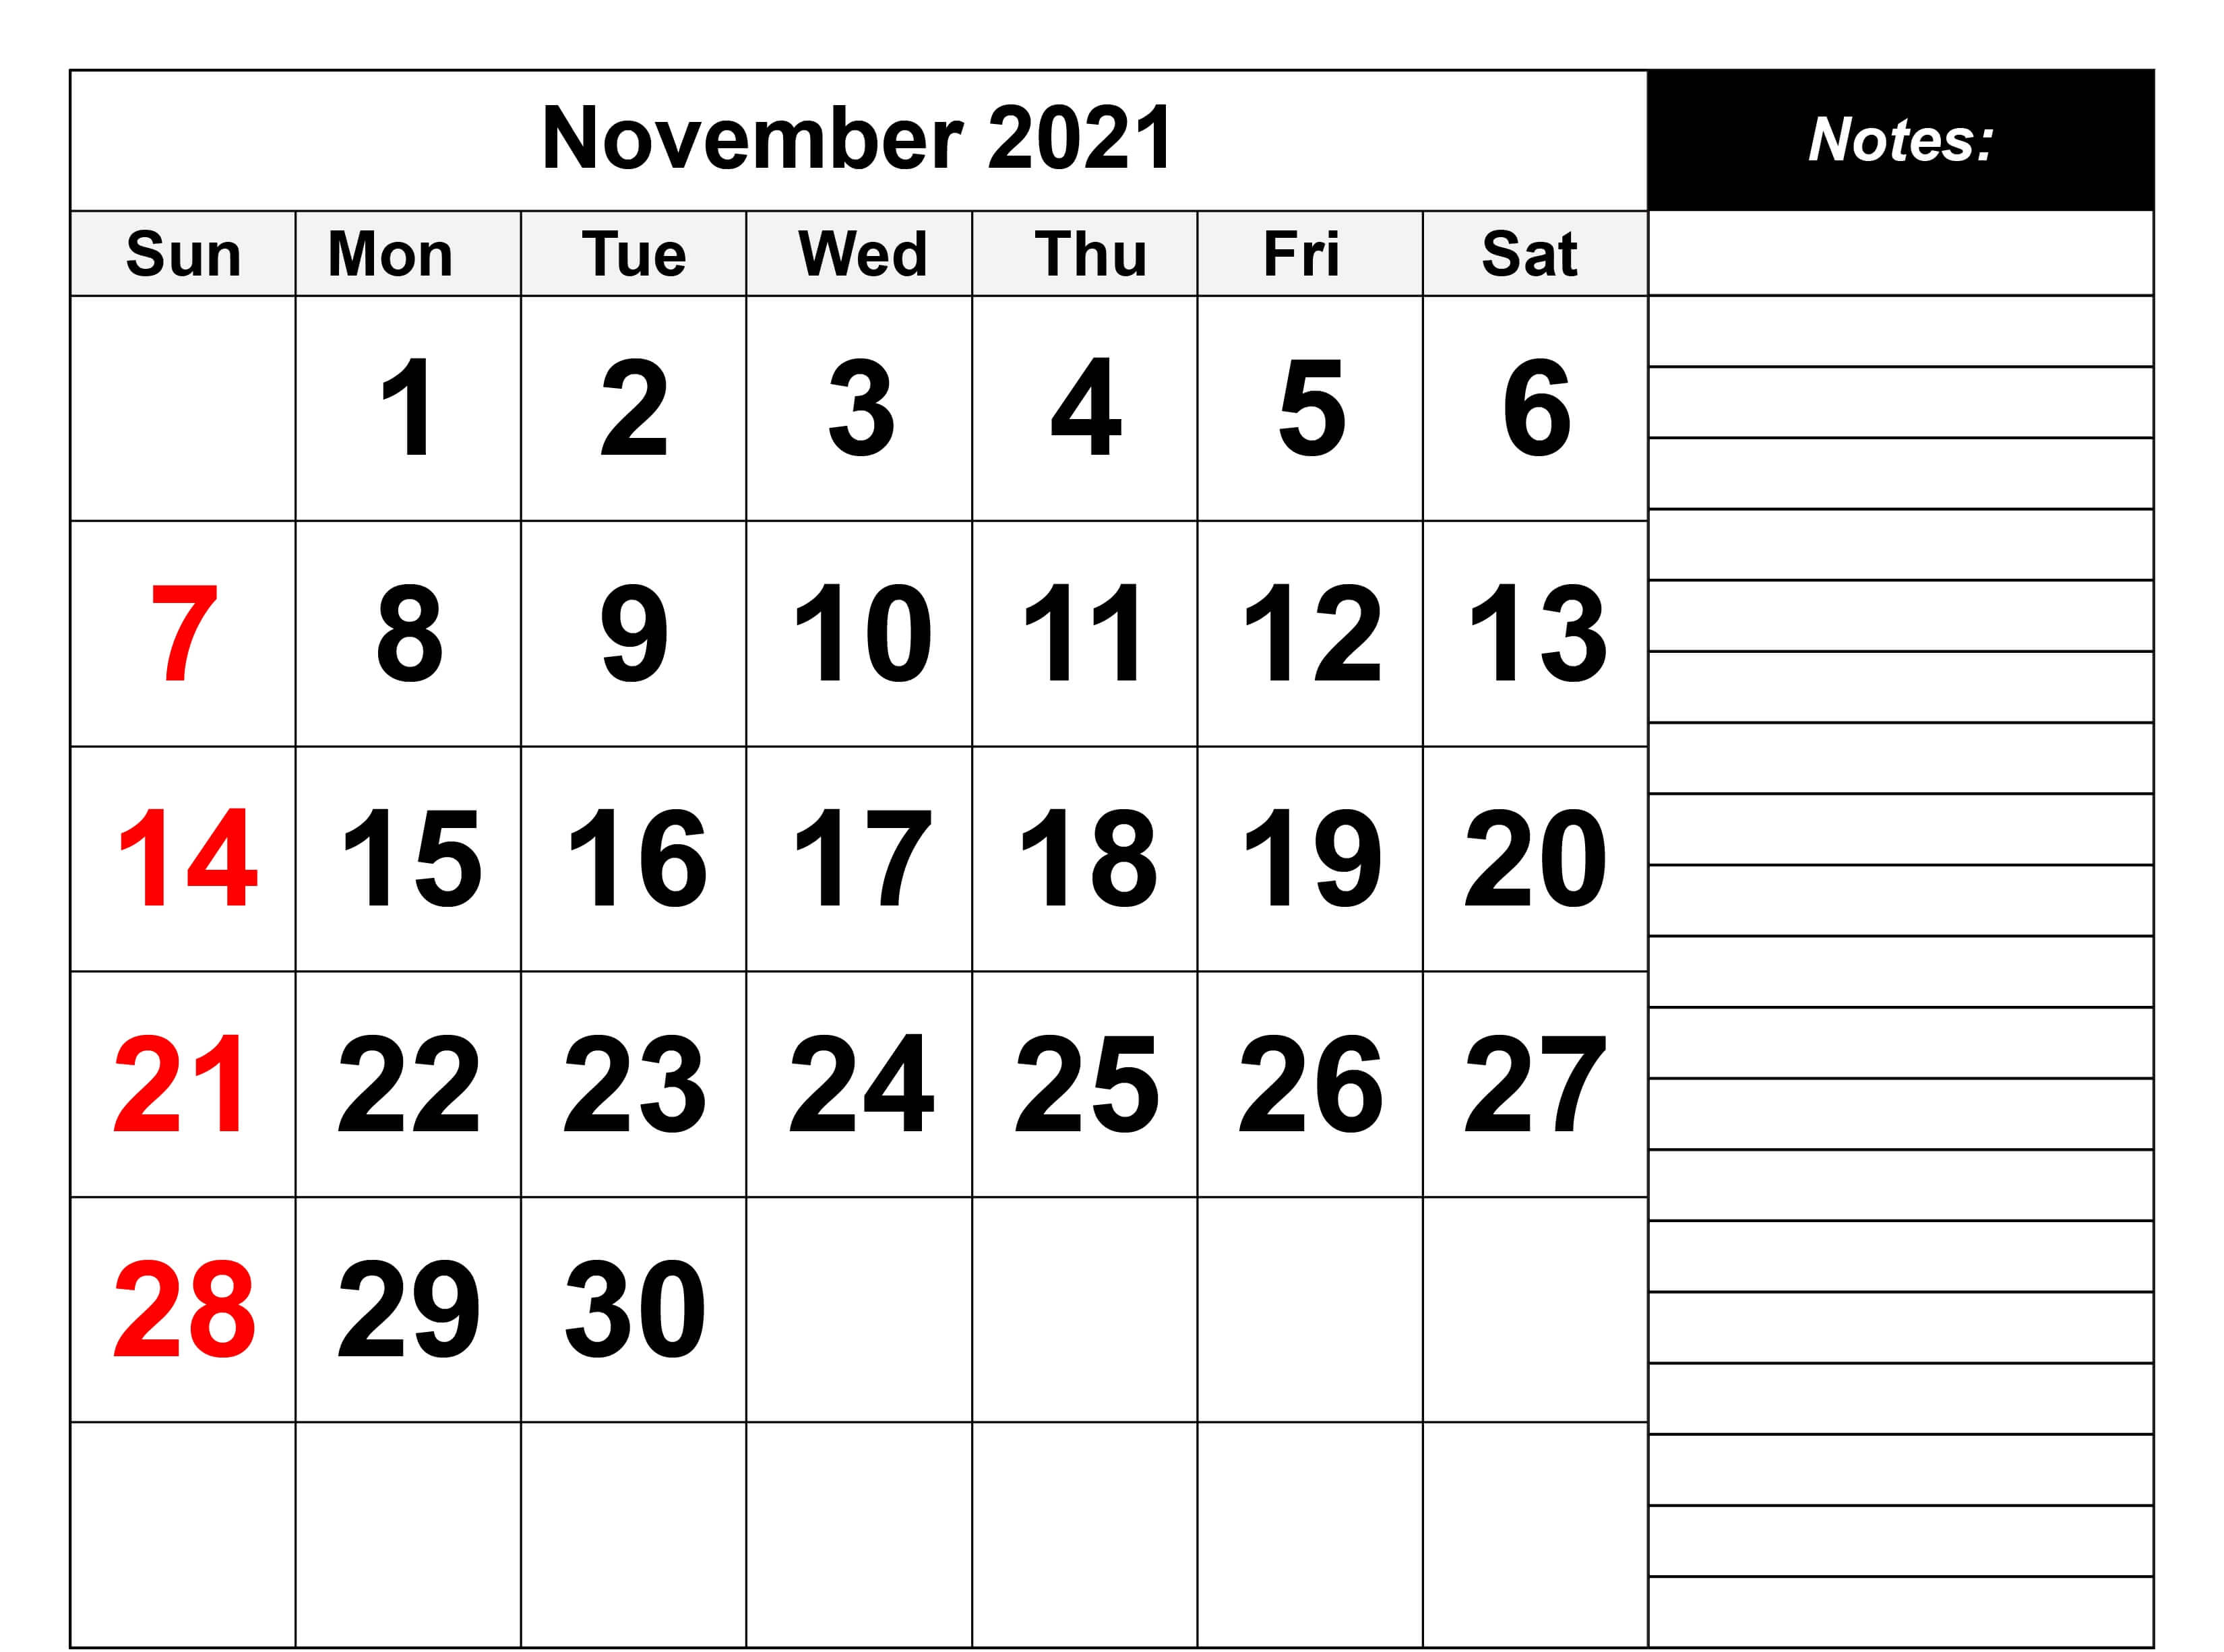 Print November 2021 Calendar With Notes